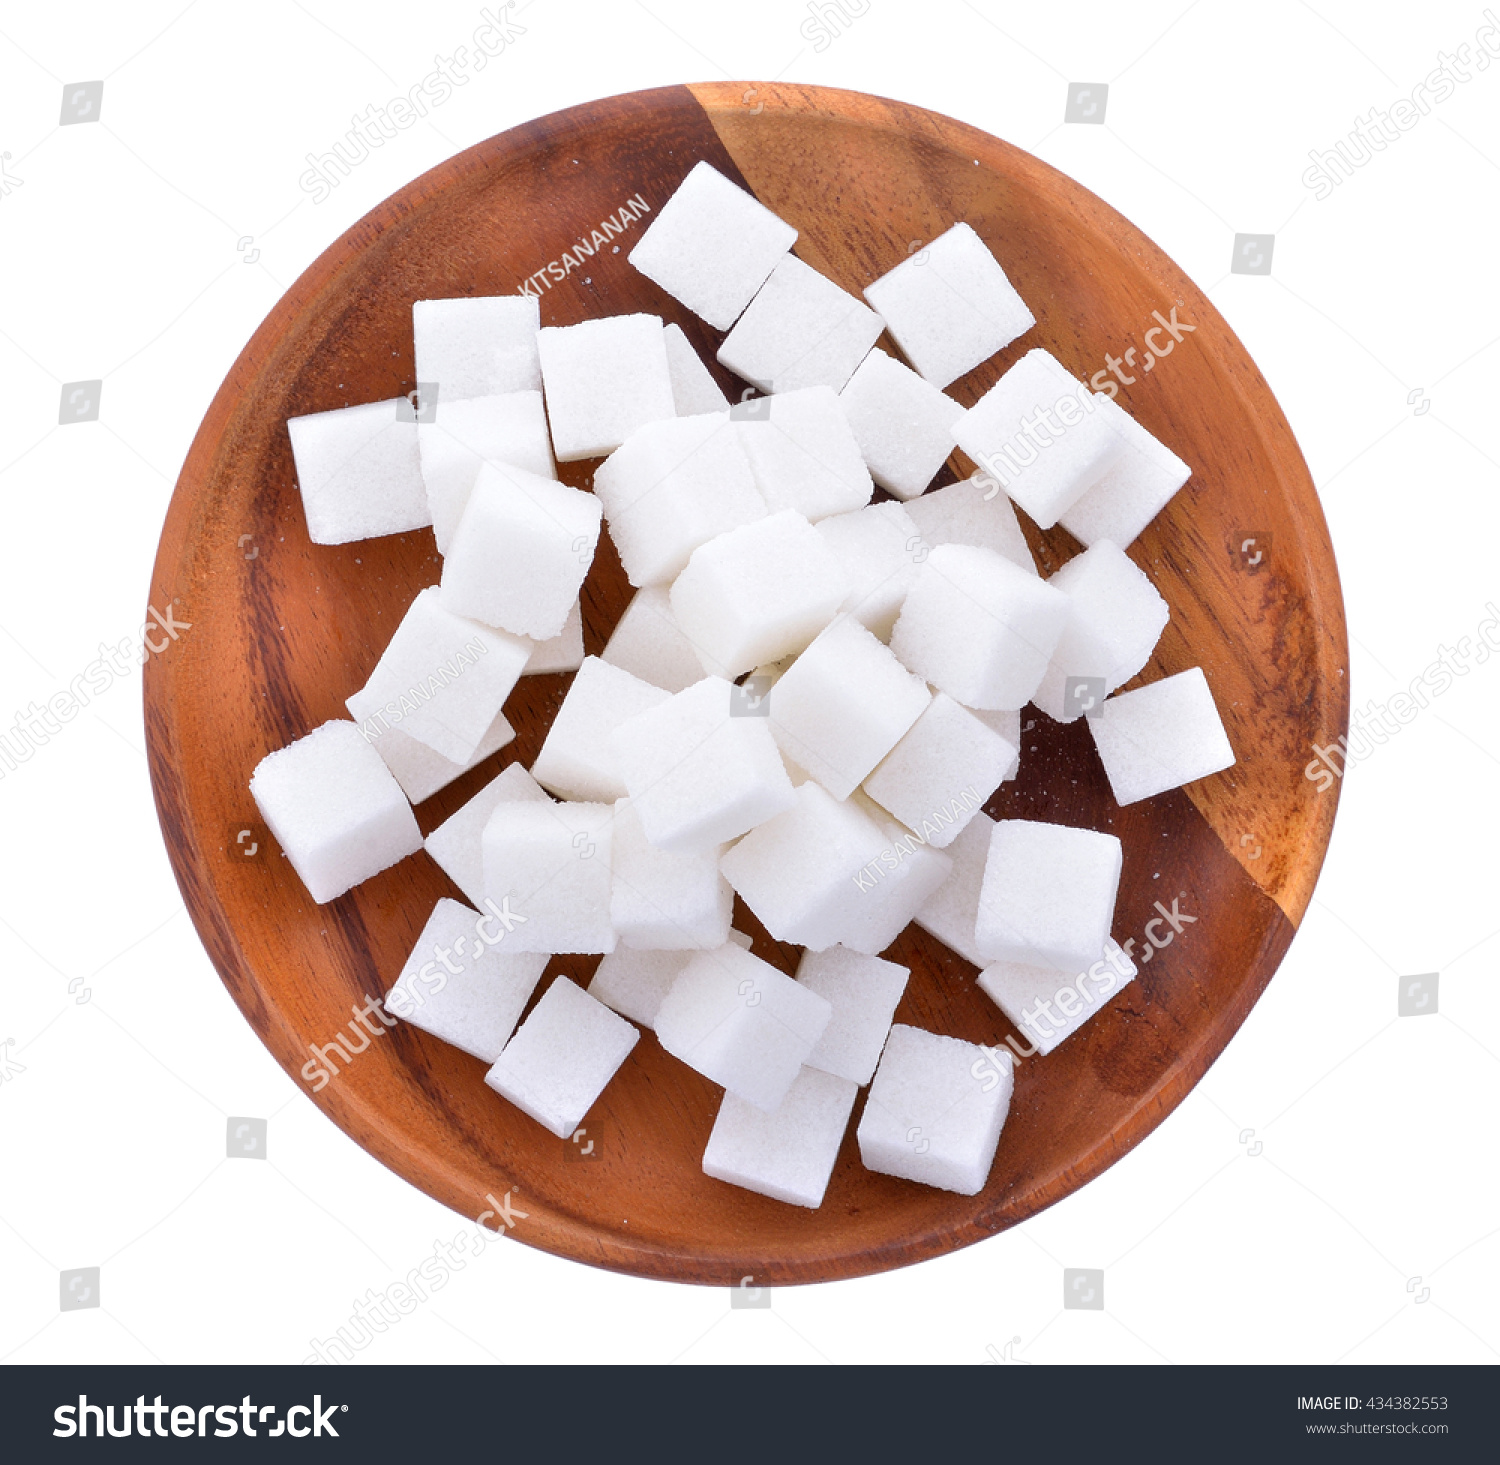 Sugar cube in wood plate #434382553